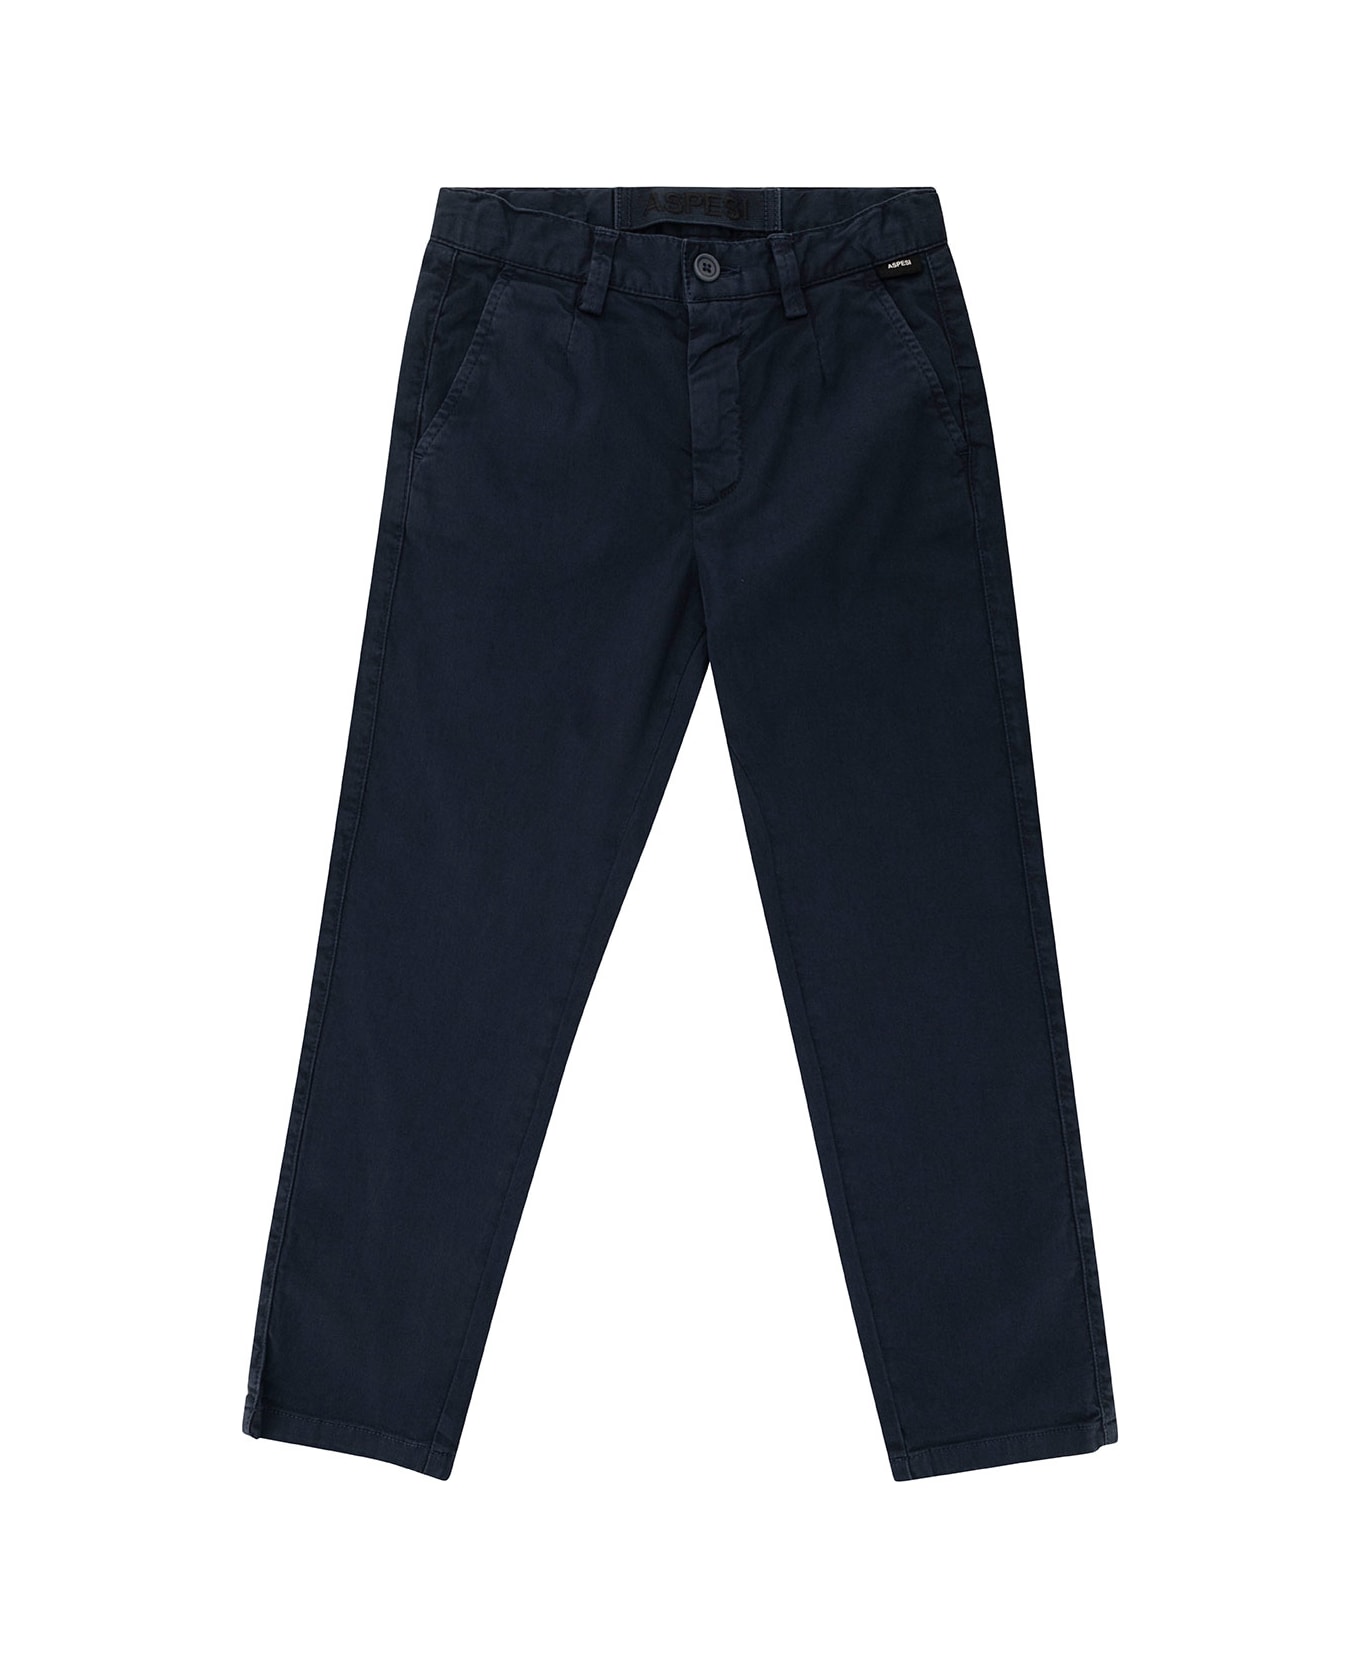 Aspesi Blue Straight Five-pocket Pants In Stretch Cotton Boy - Blu ボトムス